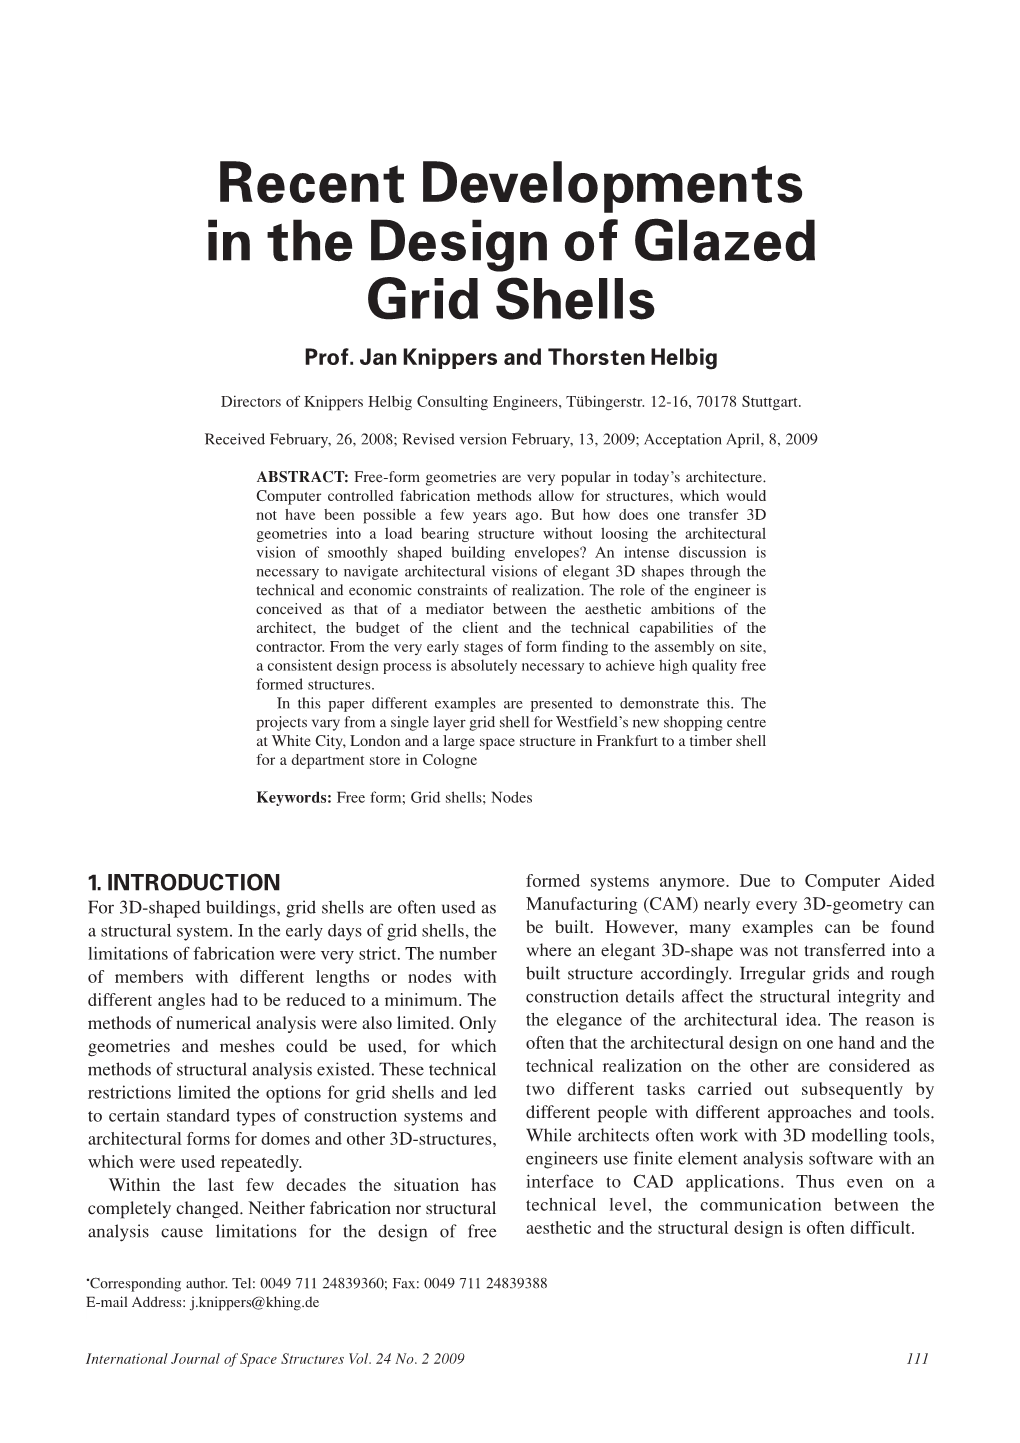 Recent Developments in the Design of Glazed Grid Shells Prof